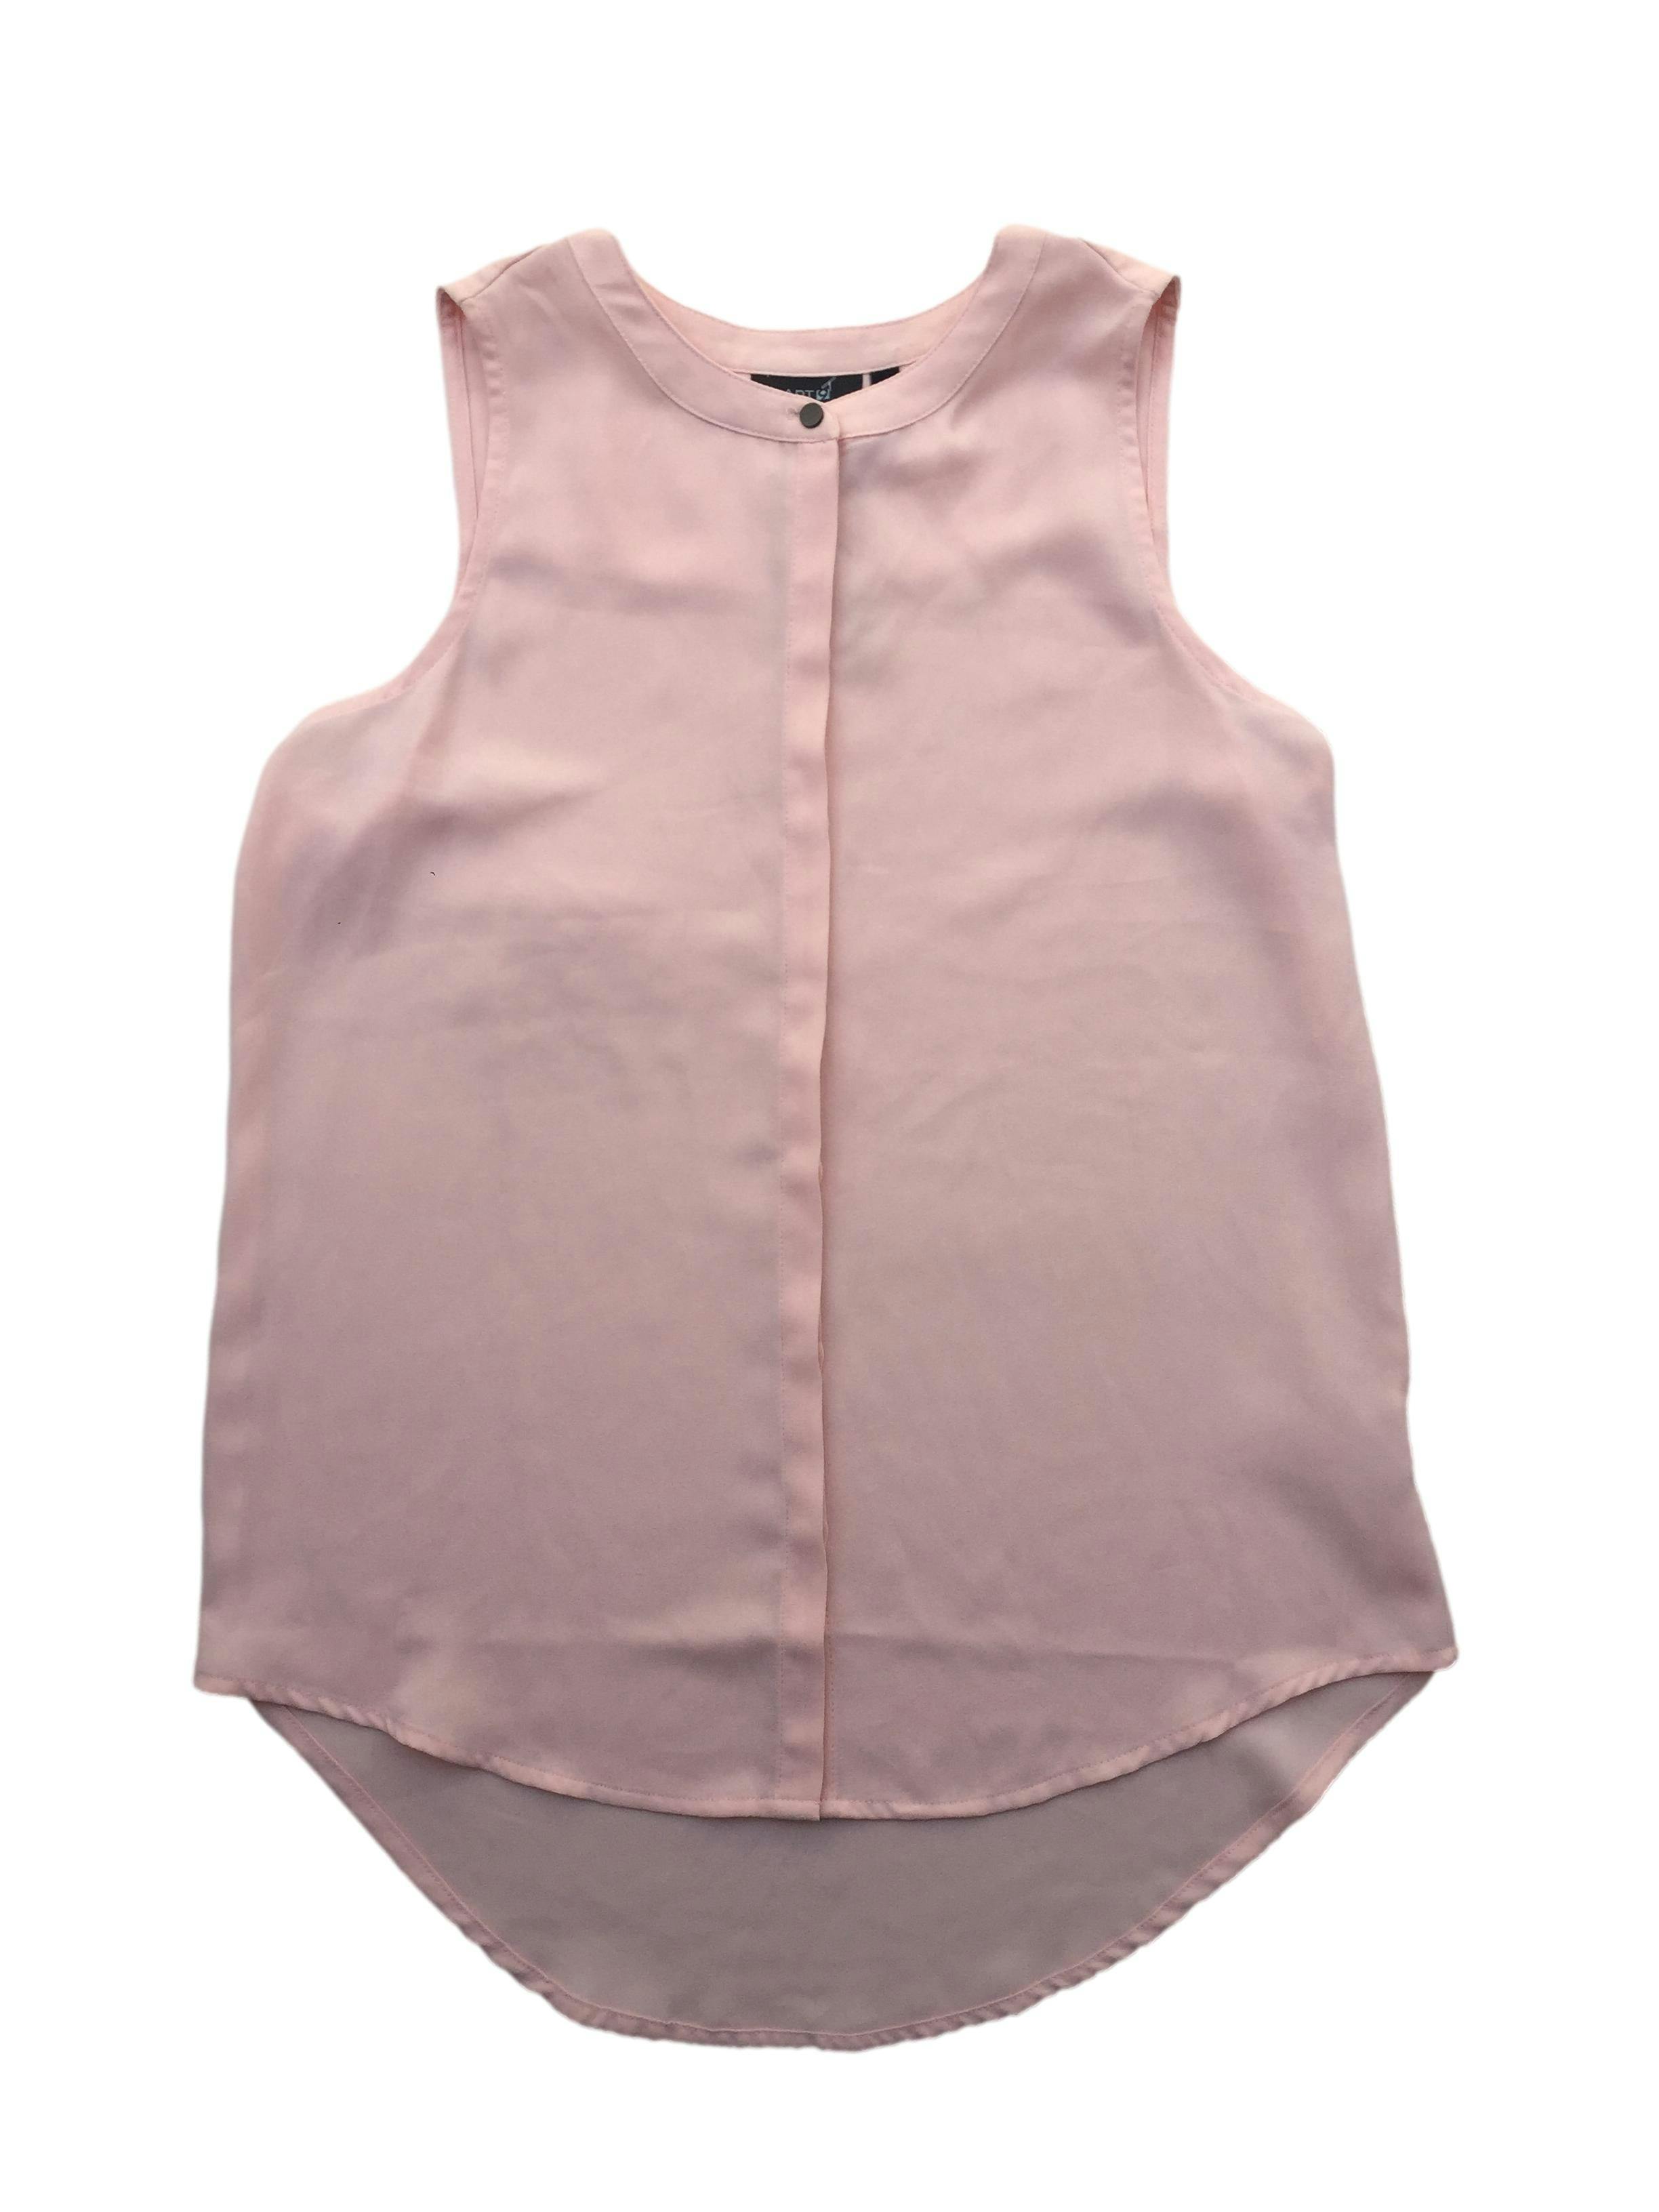 Blusa palo rosa de crepé con botones escondidos. Busto 100cm, Largo 62cm.